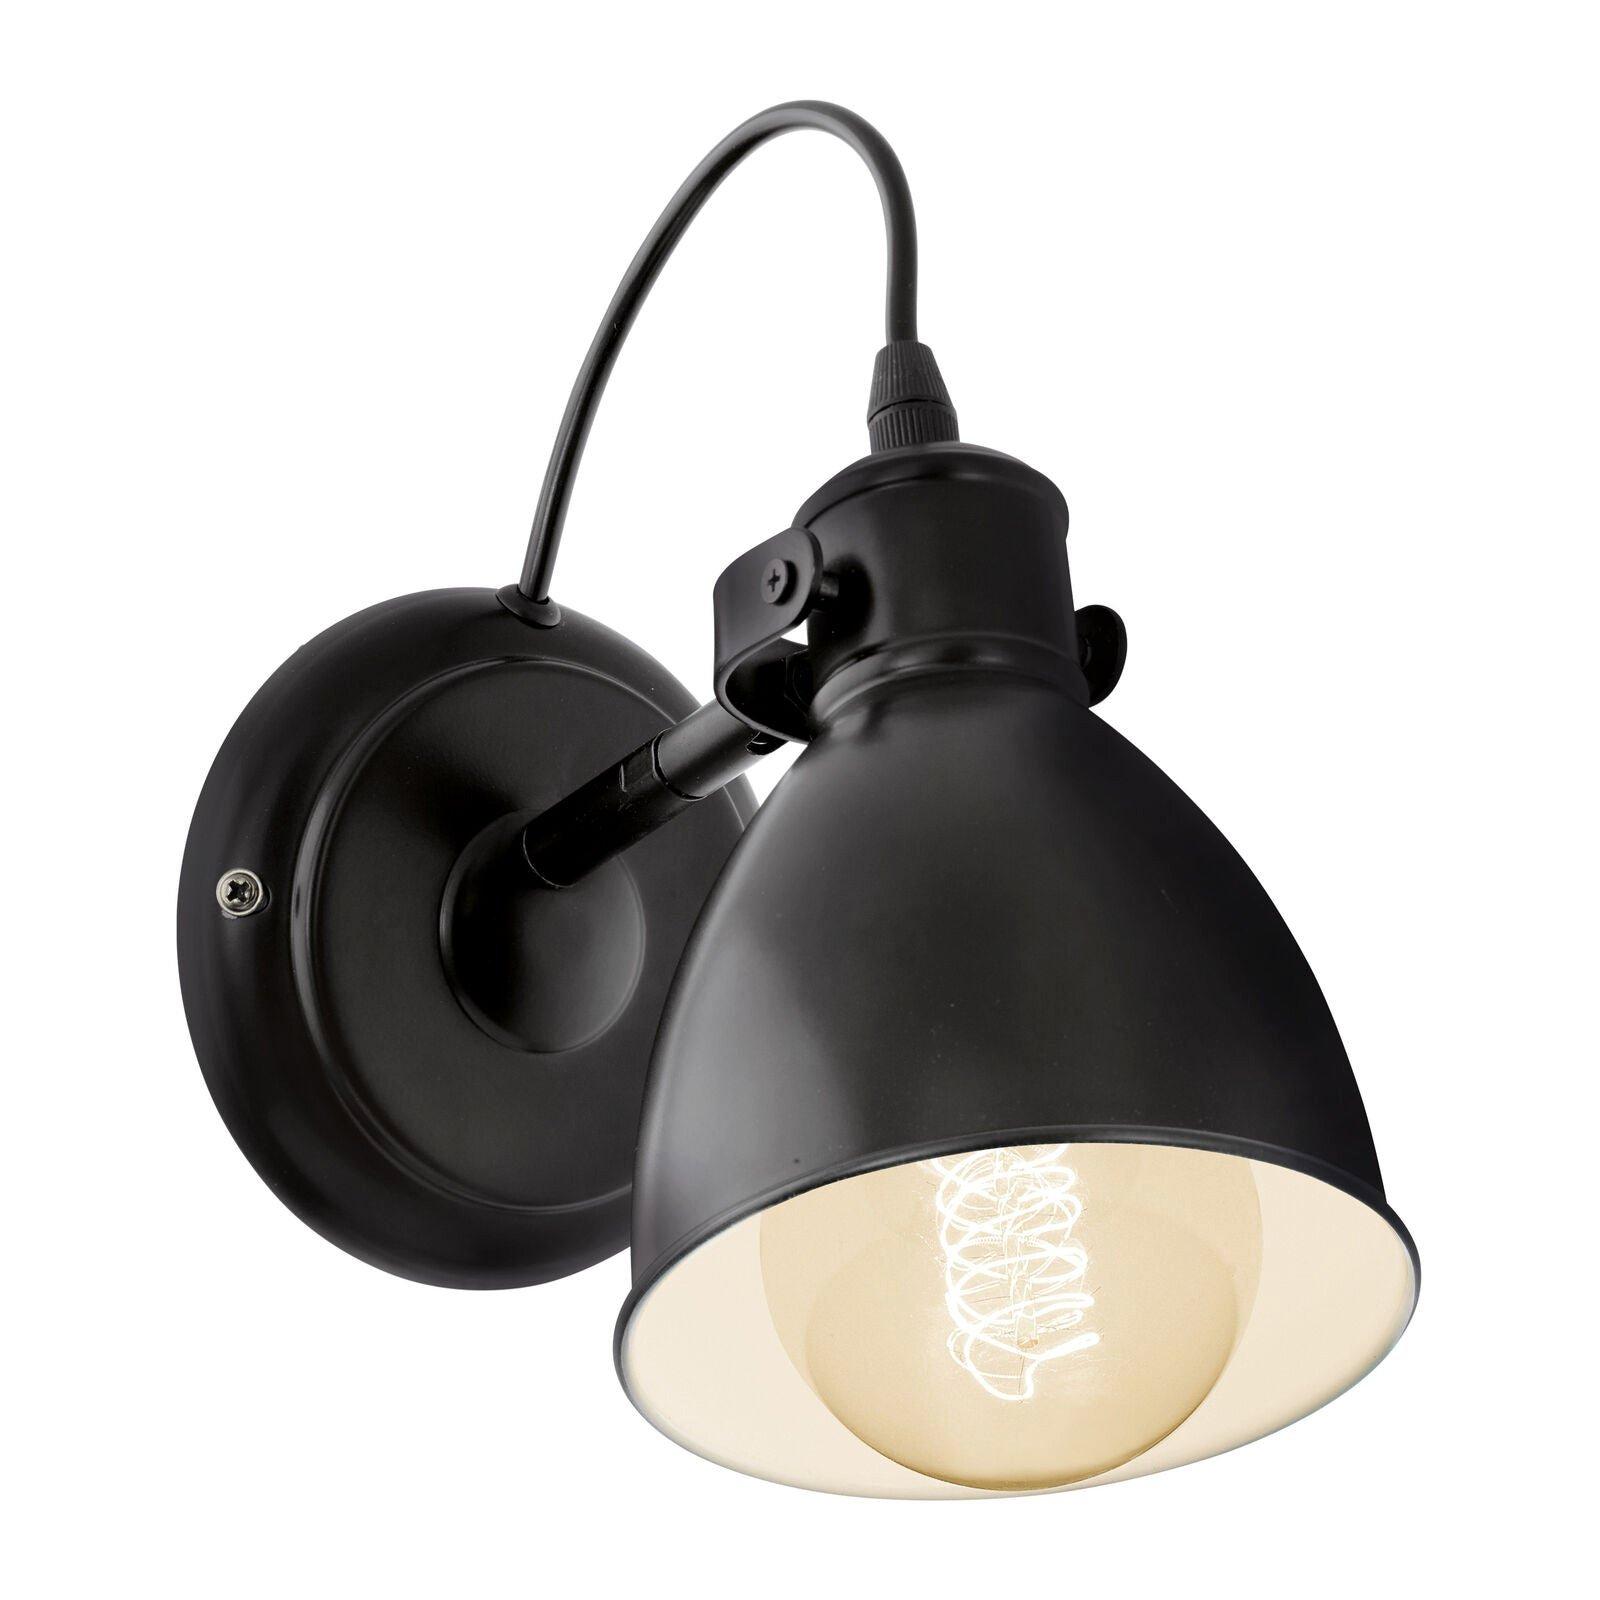 Adjustable Wall Light / Sconce Black & White Bowl Shade 1 x 40W E27 Bulb